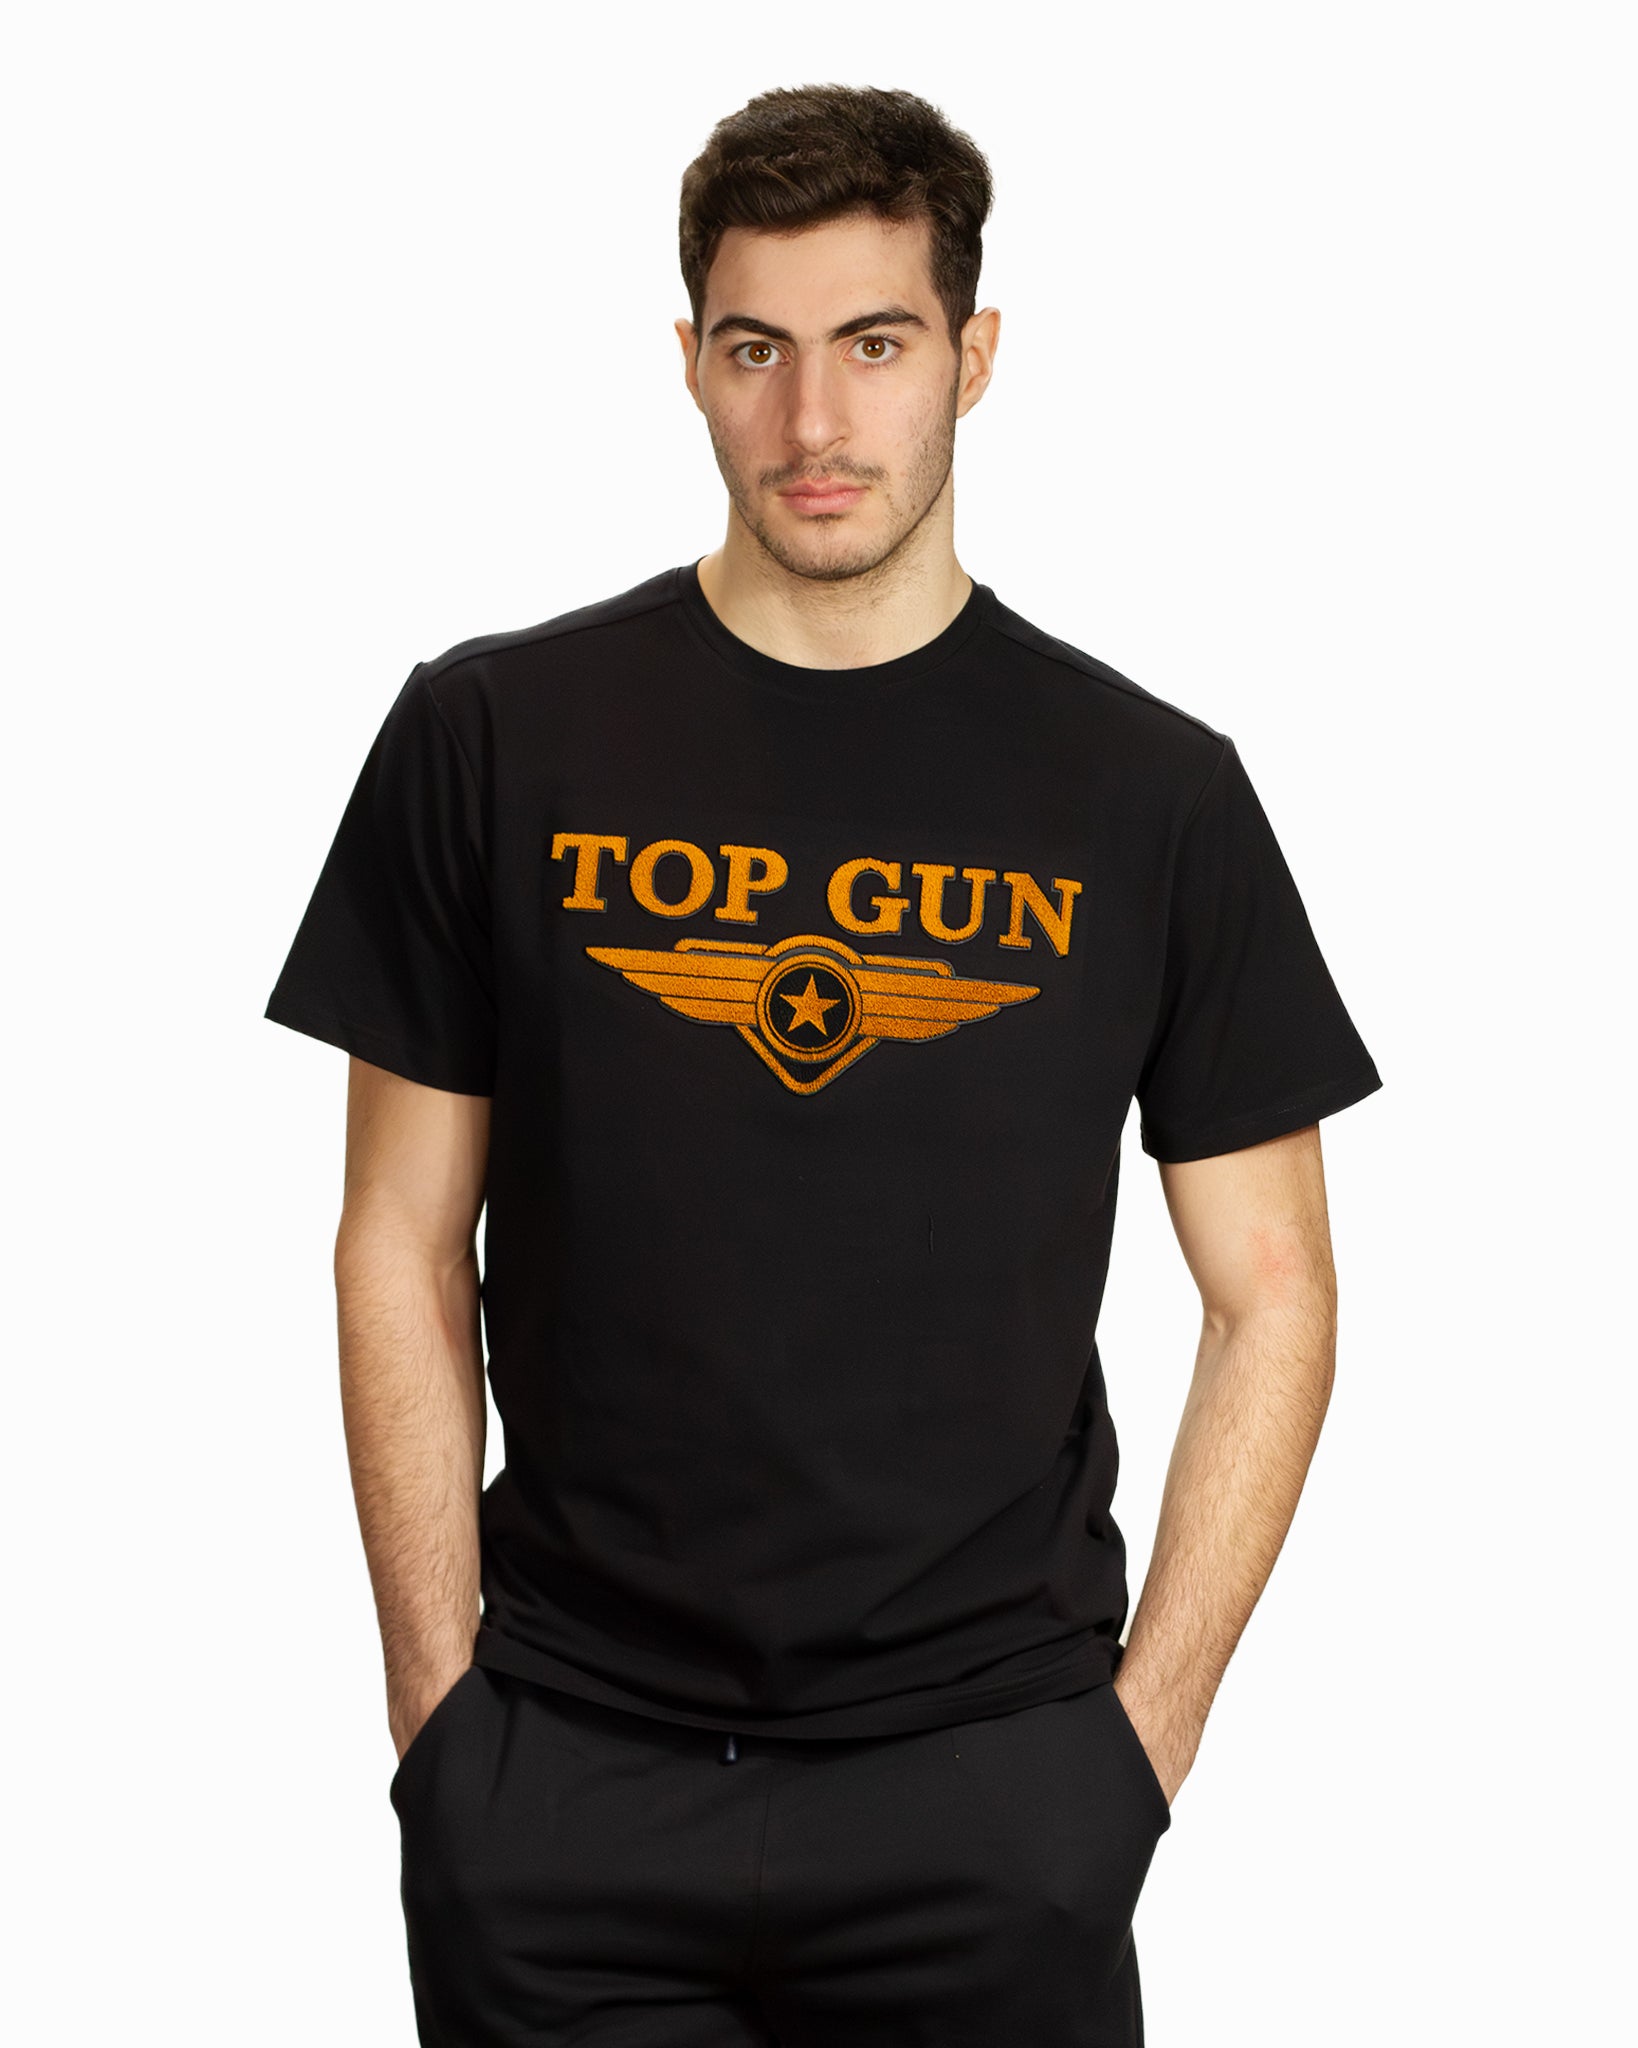 TOP GUN® EMBROIDERED LOGO | TOP – GUN Gun Original TEE Top Store GUN TOP | T-shirts Clothing